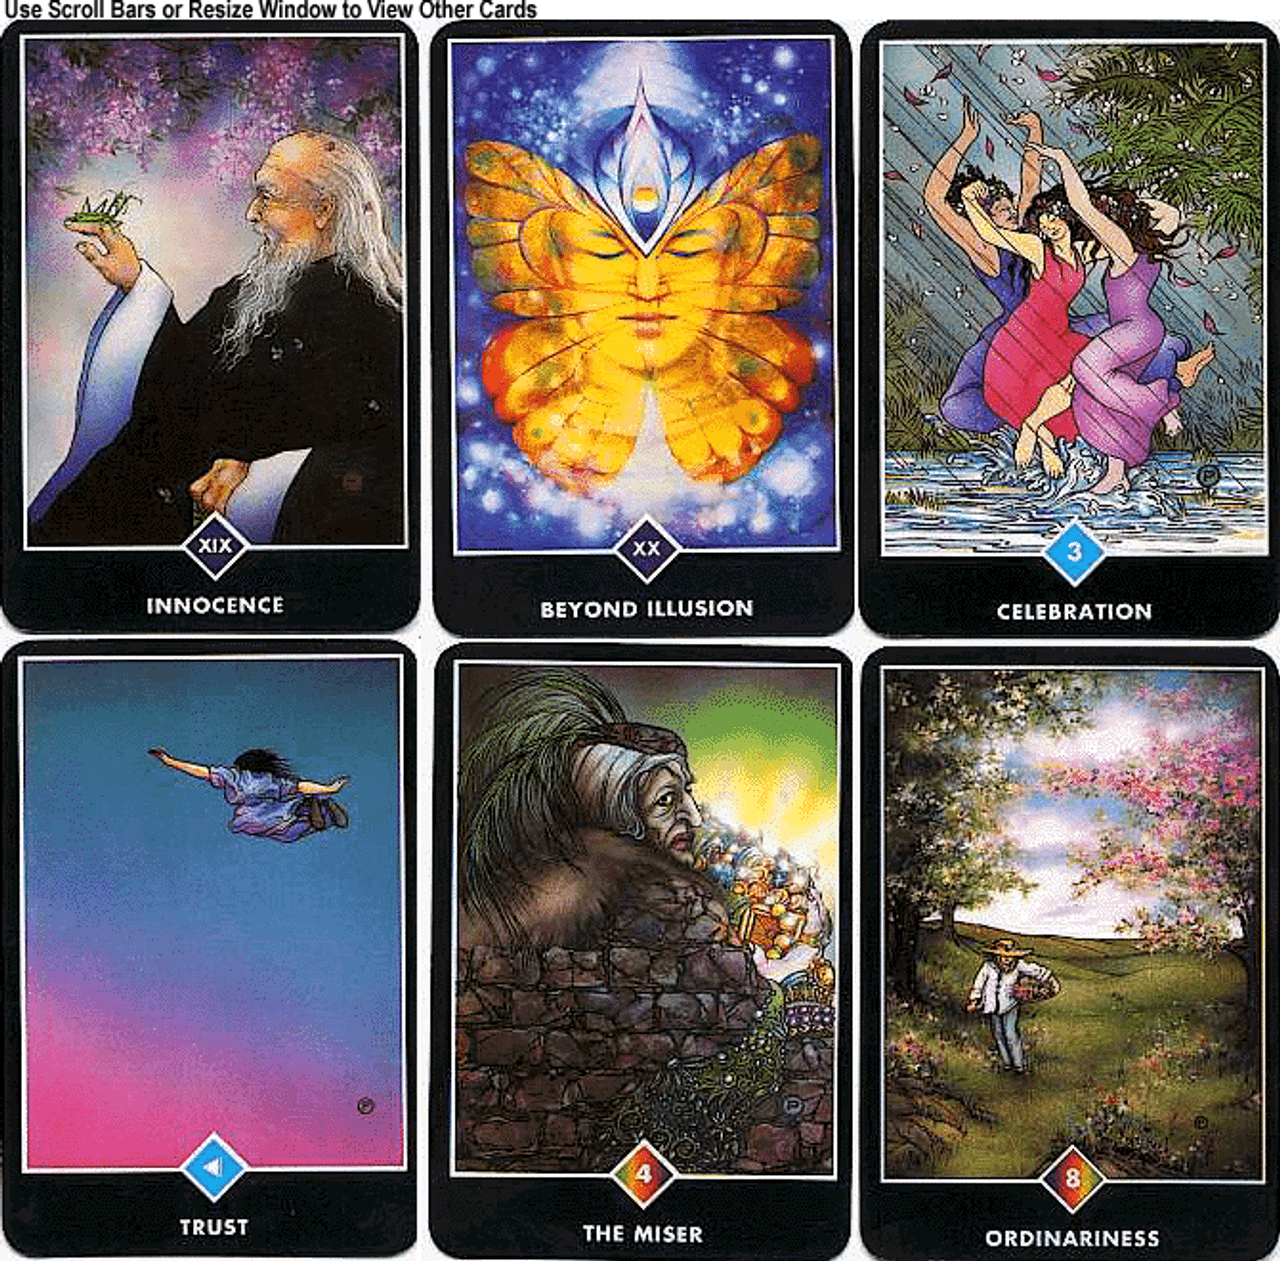 osho zen tarot cards meanings